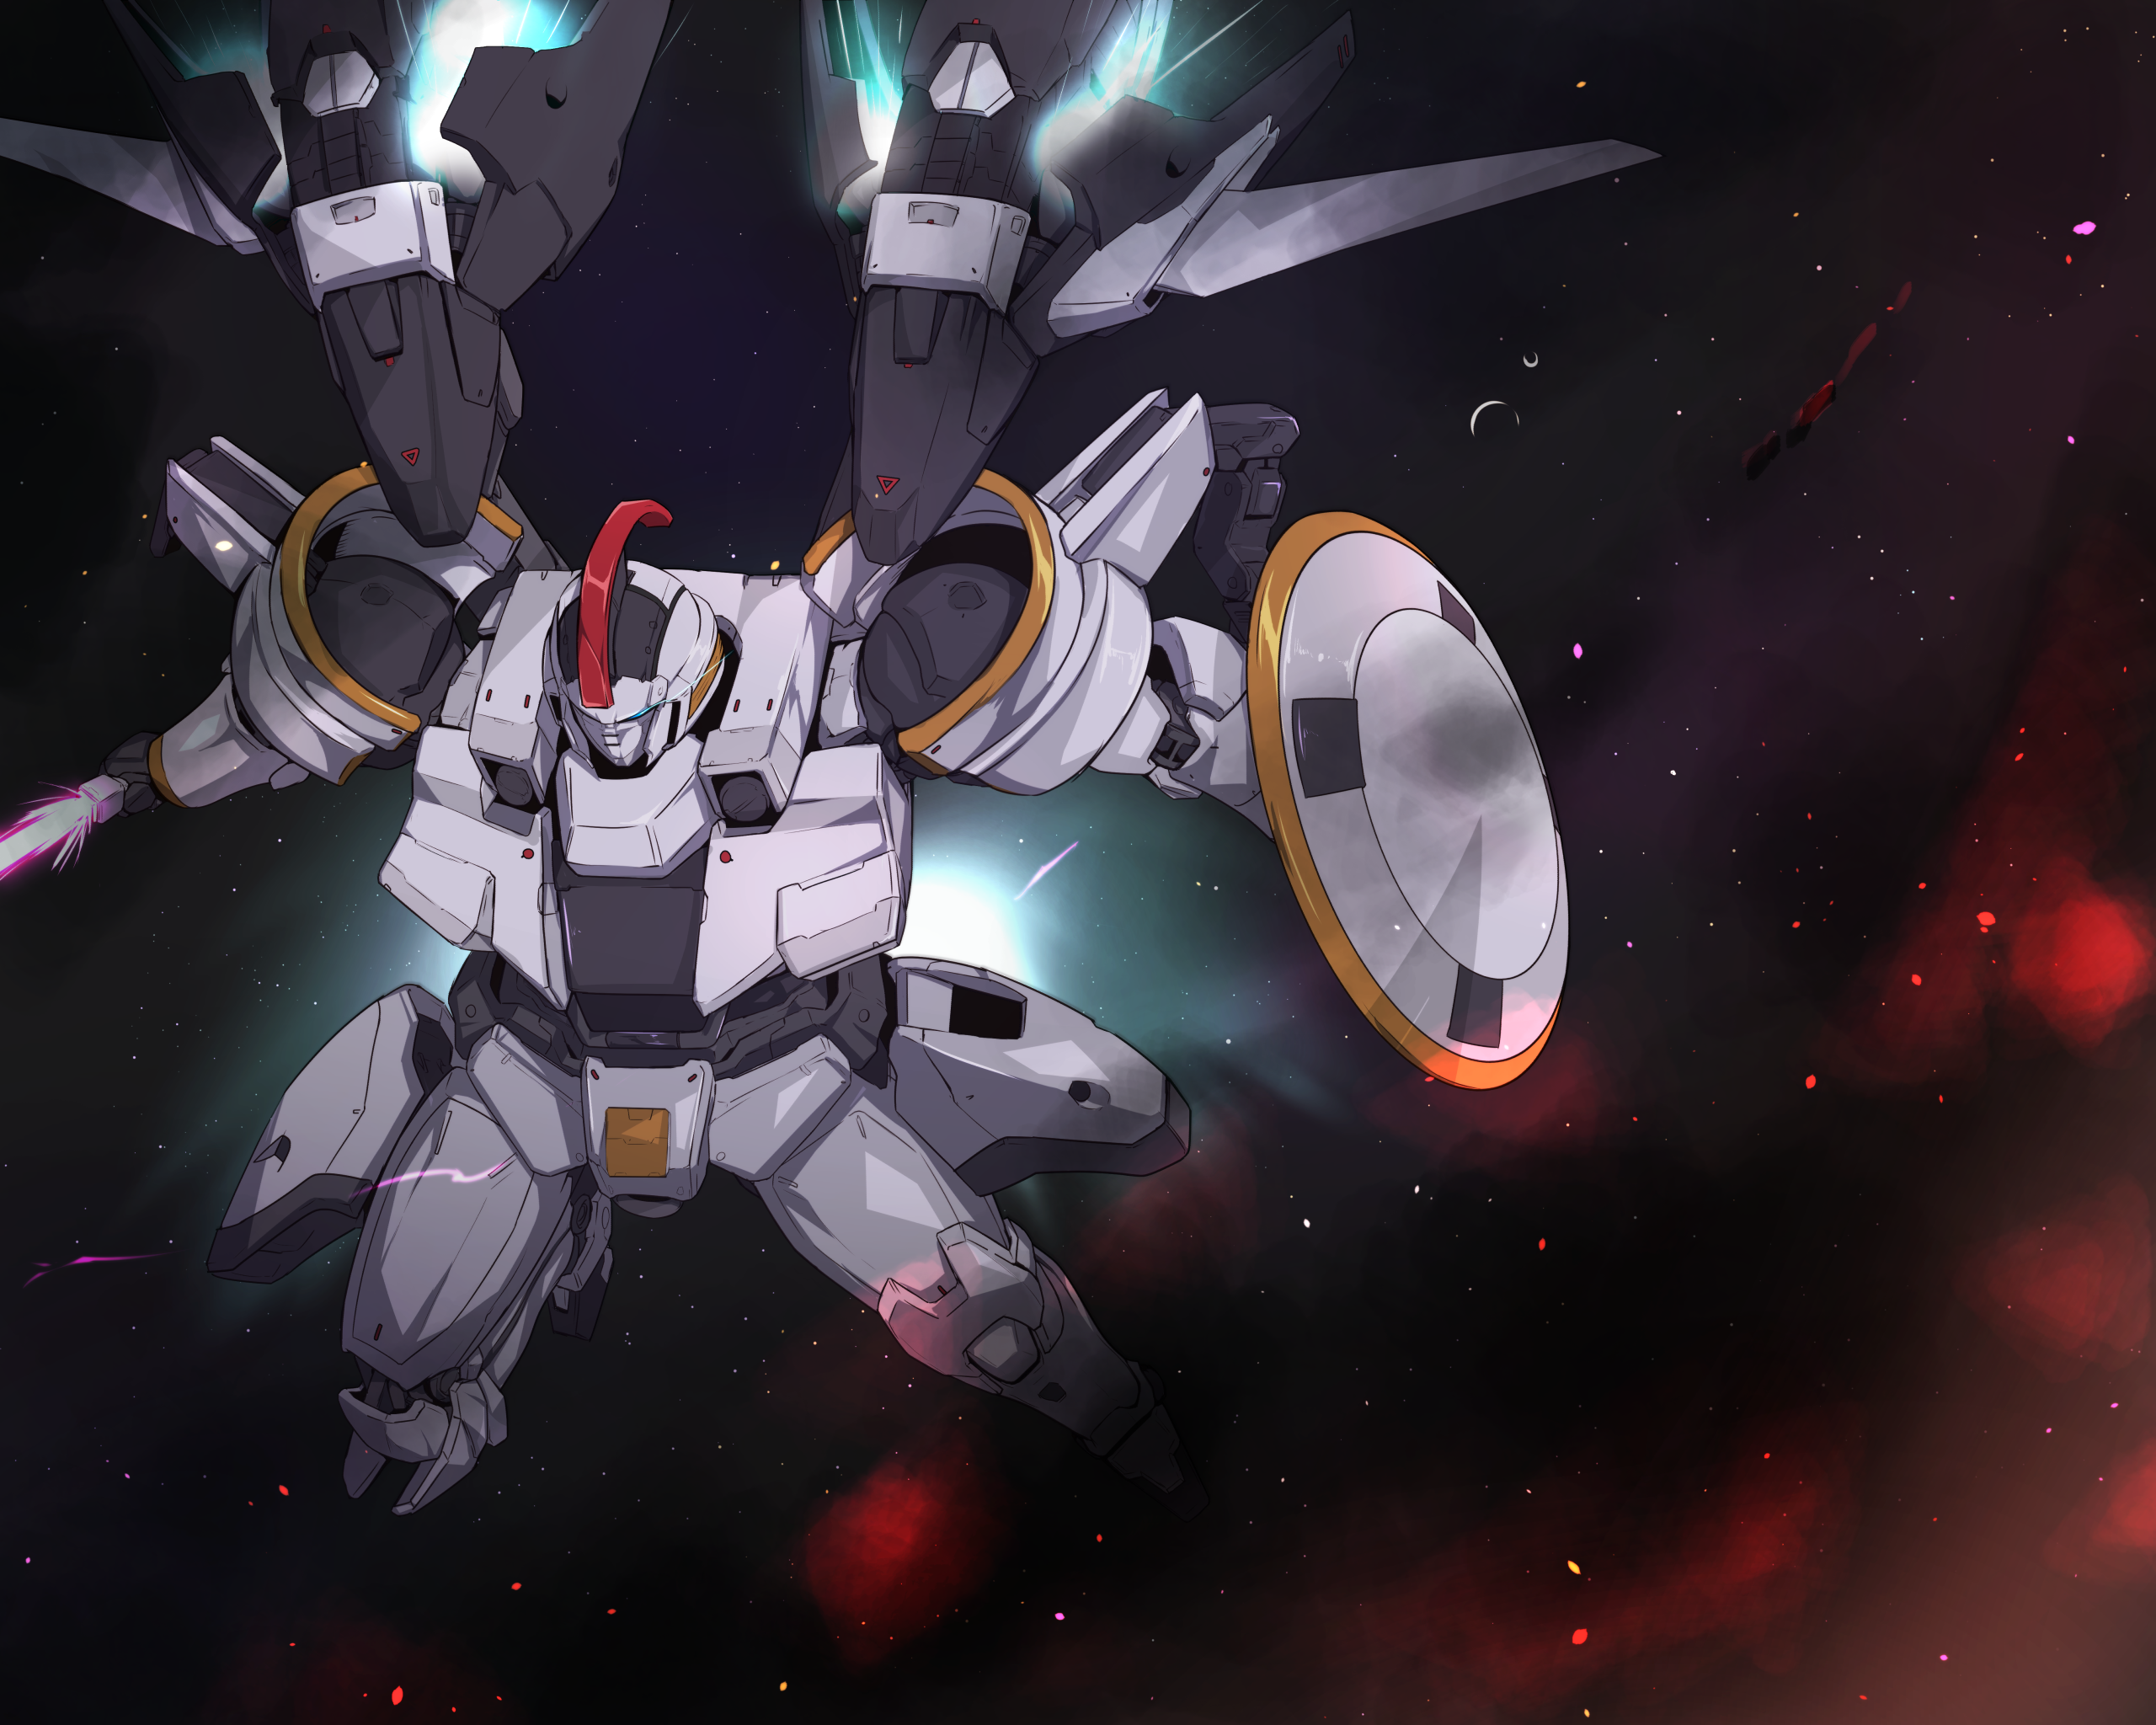 Tallgeese Anime Mechs Mobile Suit Gundam Wing Super Robot Taisen Mobile Suit Artwork Digital Art Fan 2560x2048